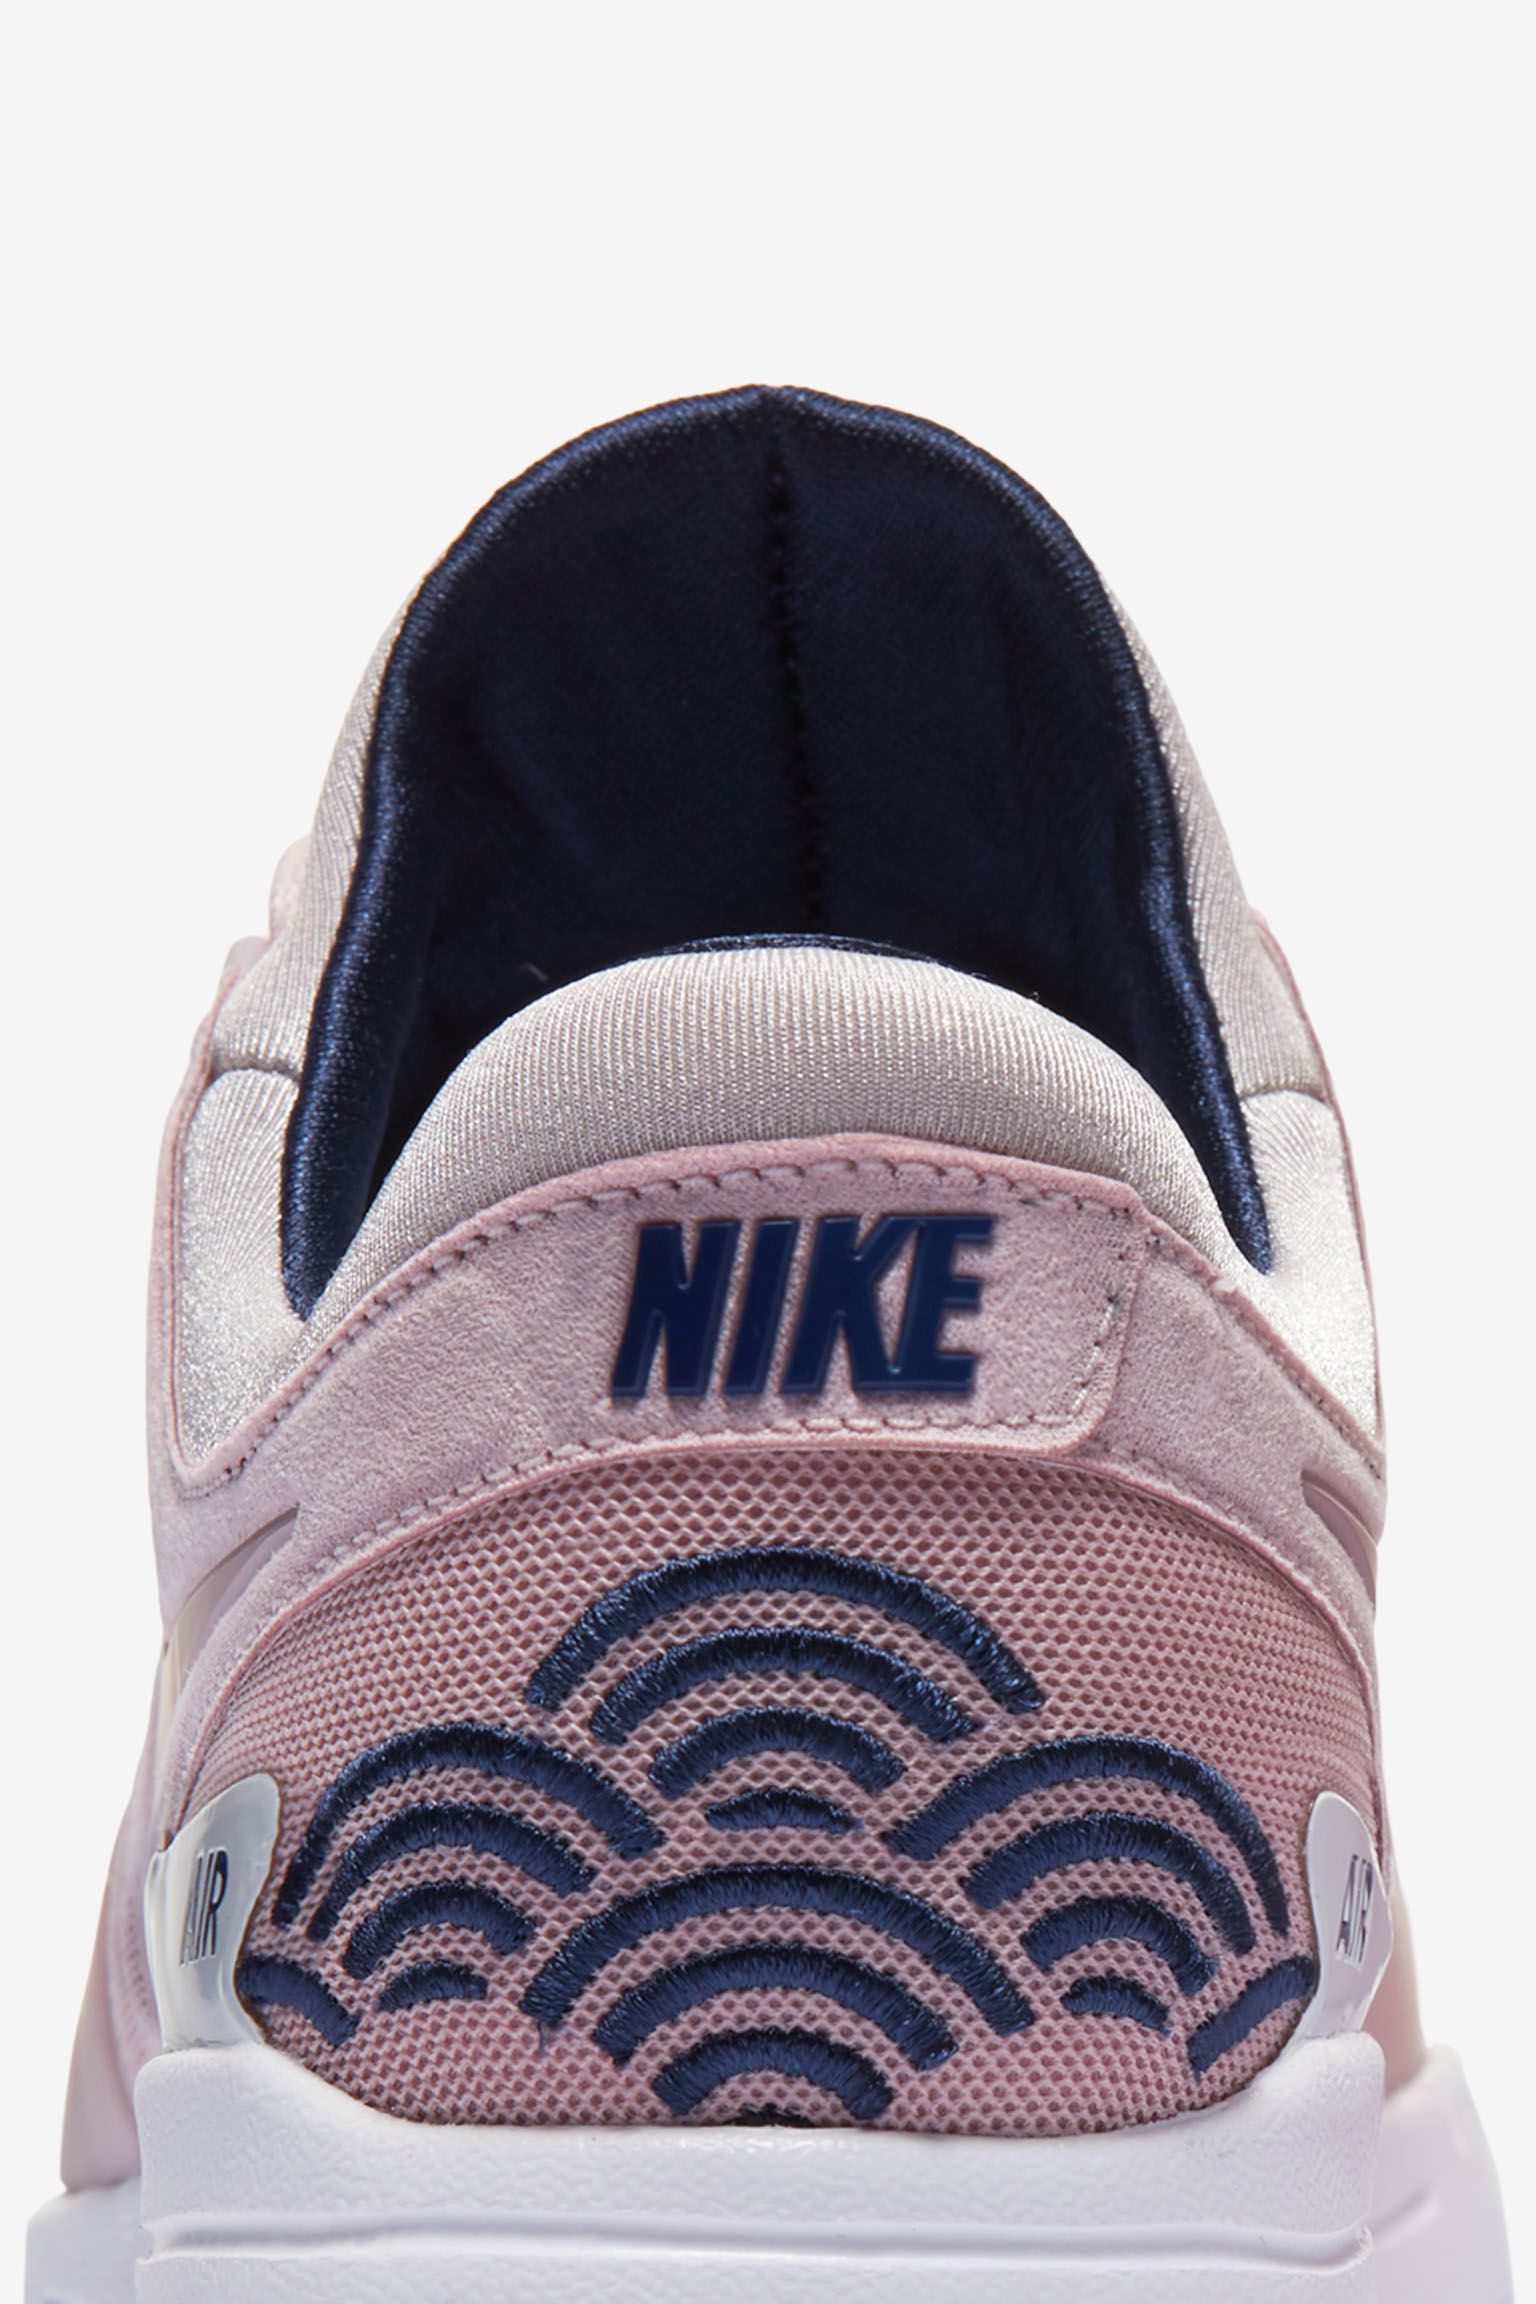 Women's Nike Air Max Zero 'Tokyo' Release Date. Nike SNKRS